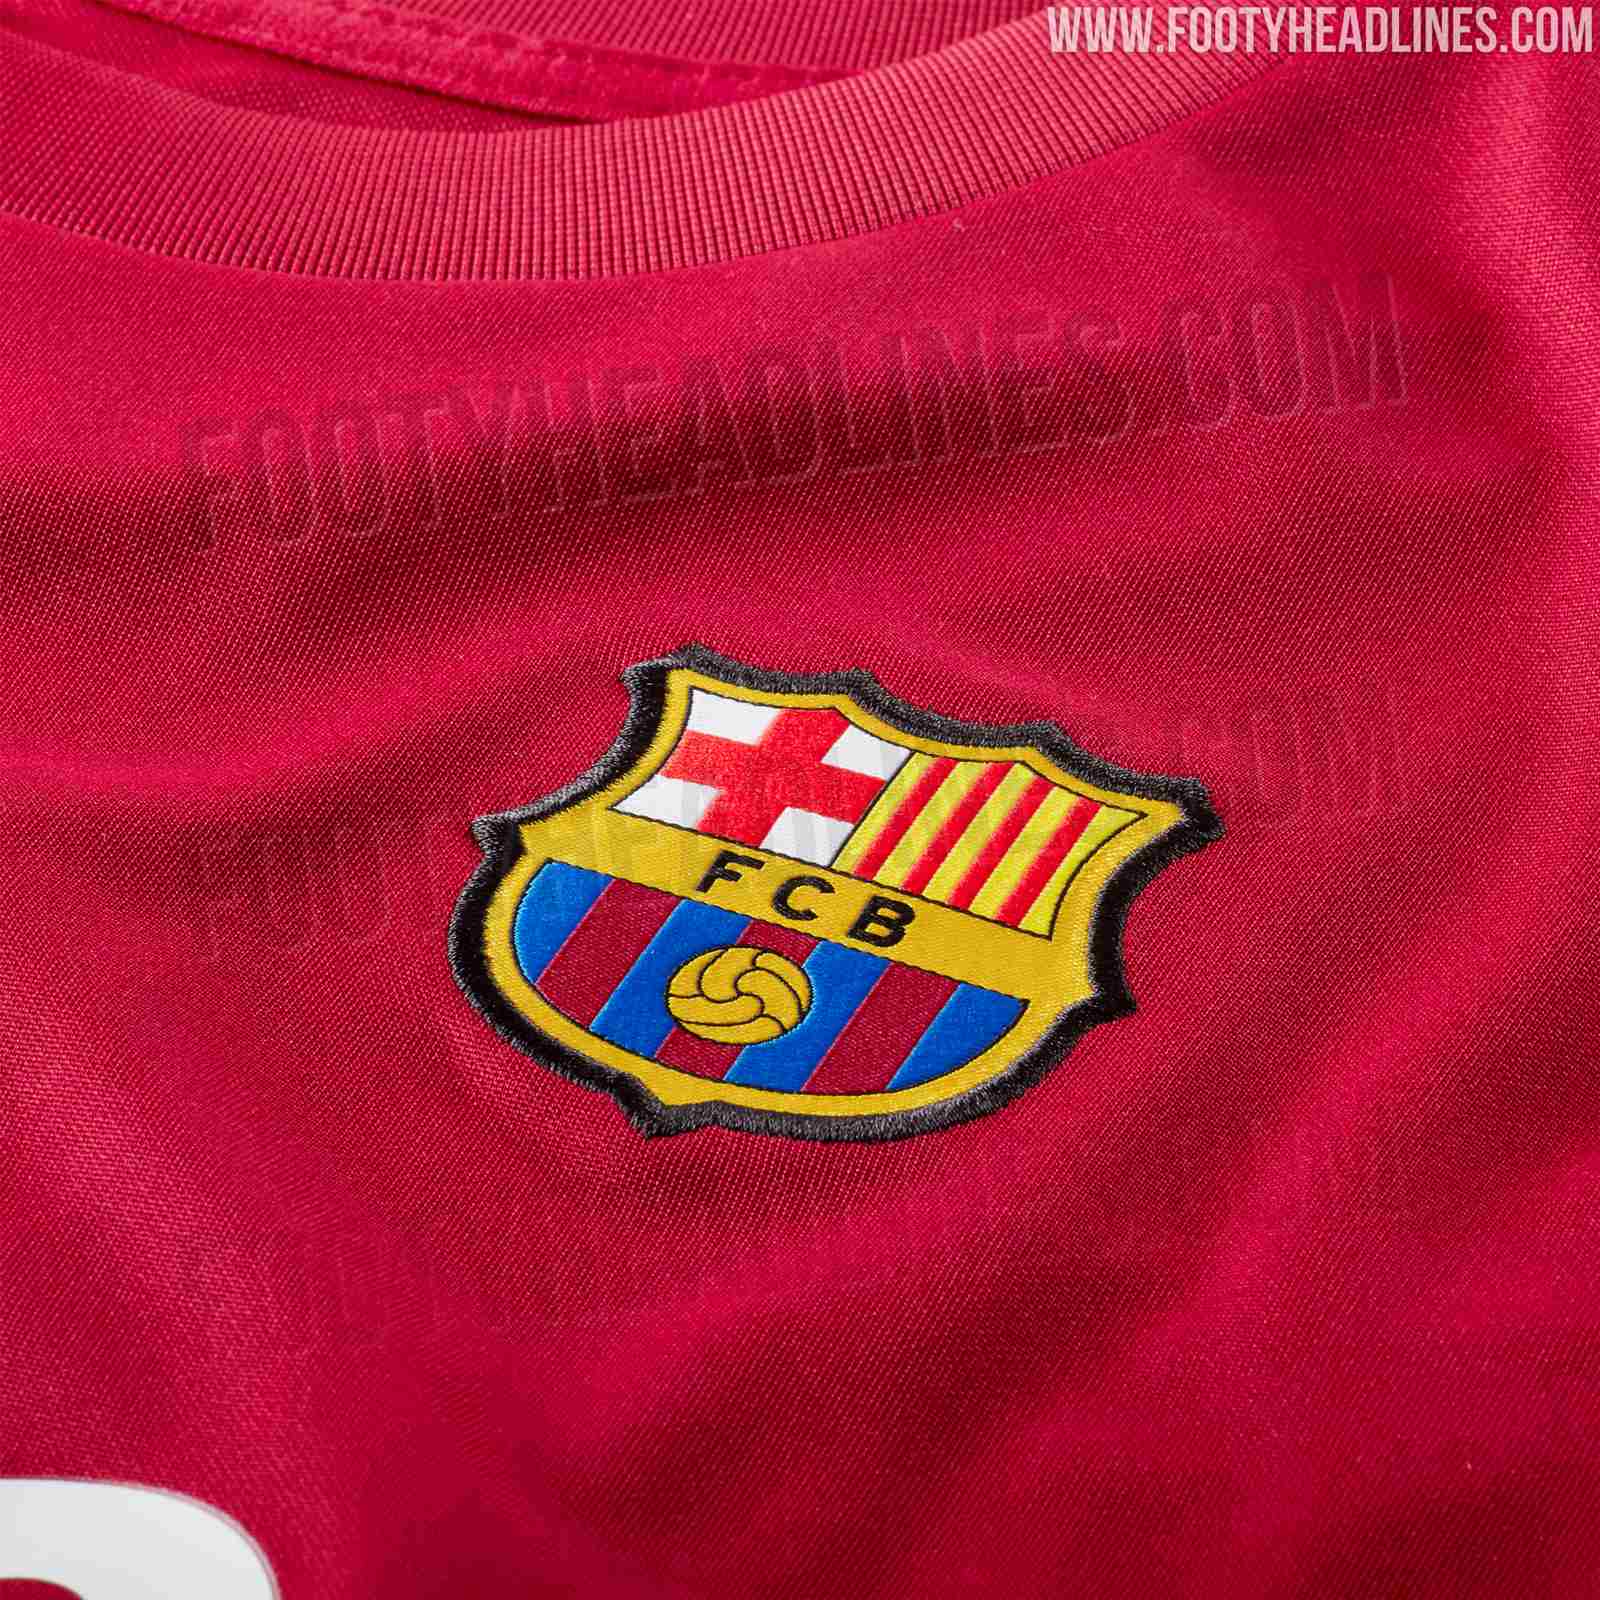 FC Barcelona 20-21 Training Kits Leaked - Footy Headlines